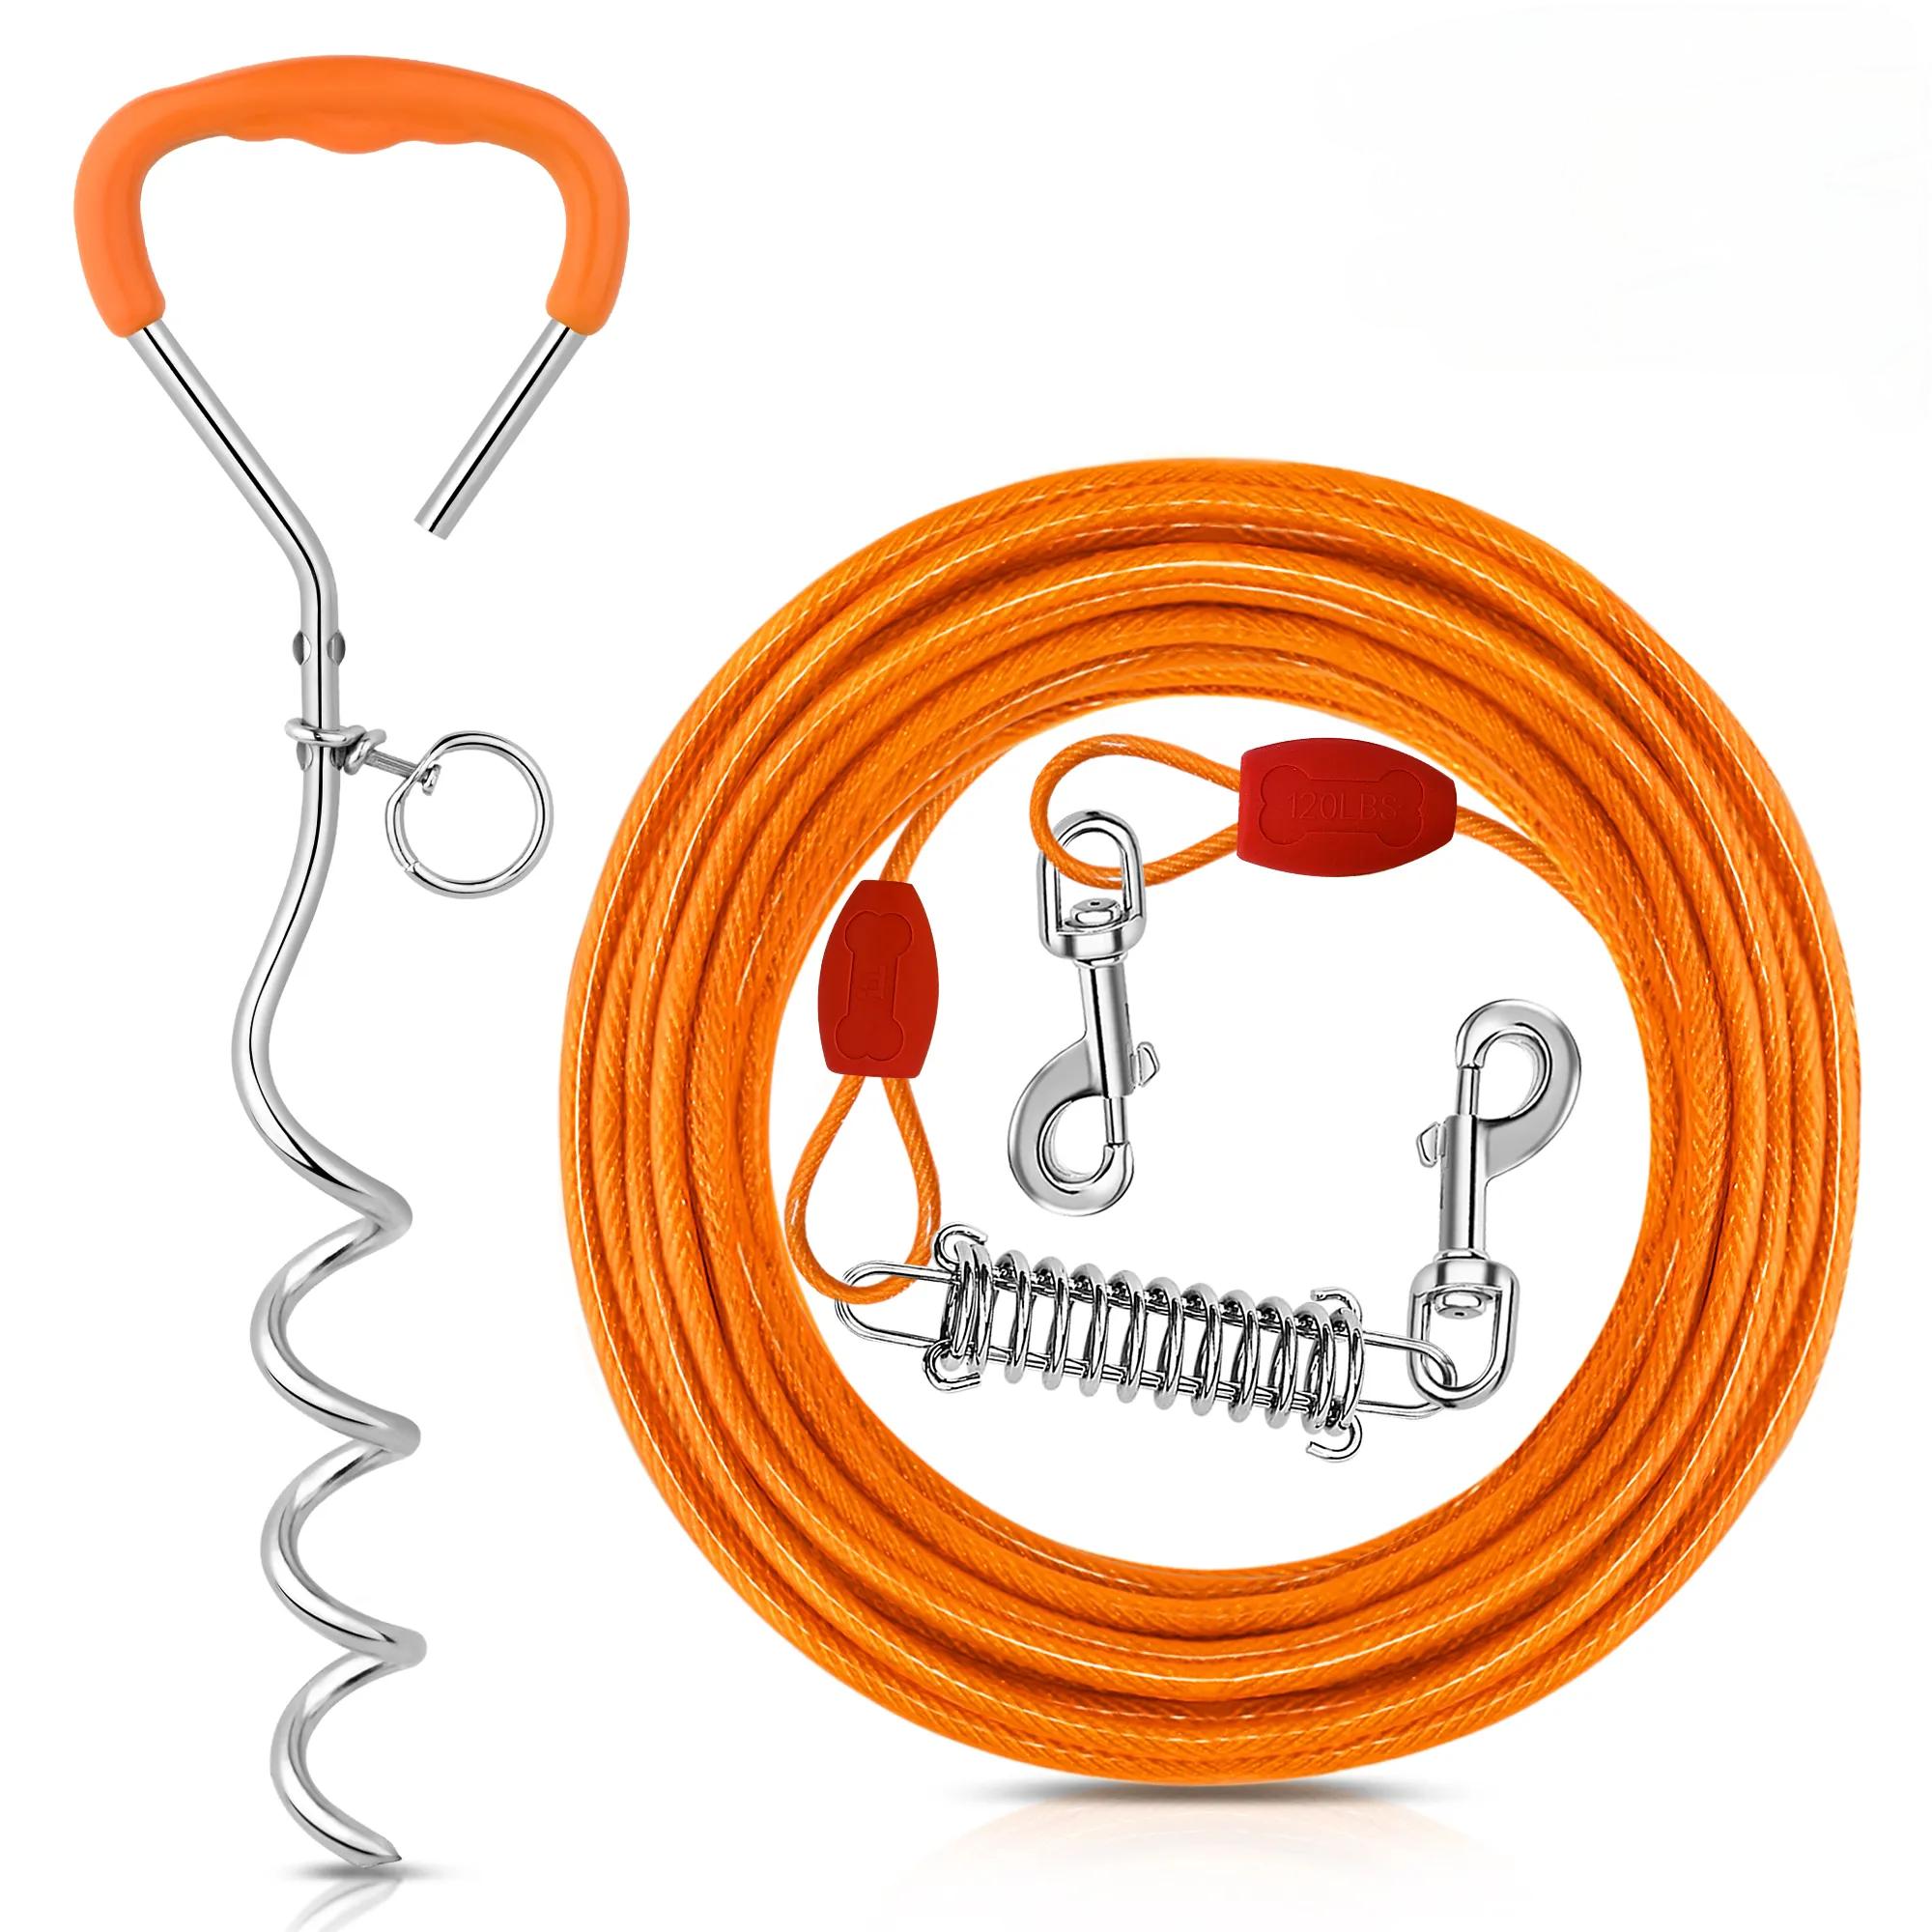 Orange Dog Tie-Out Cable Set